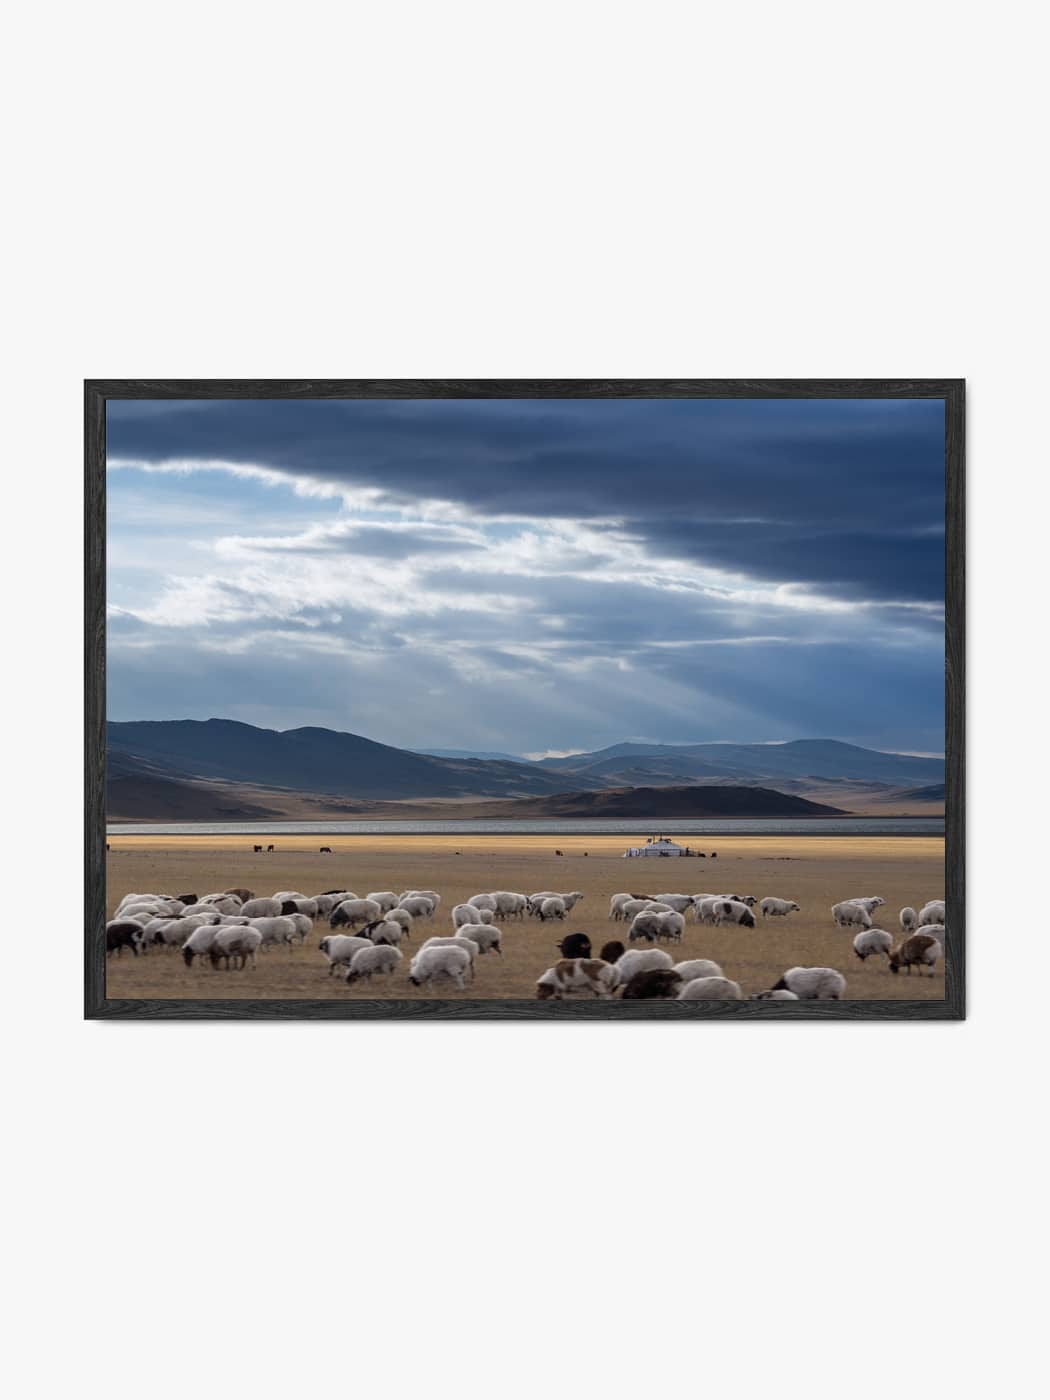 Obraz akustyczny ze zdjęcia - Owce pasące się na pastwisku na tle wzgórz - Mateusz Kotlarski